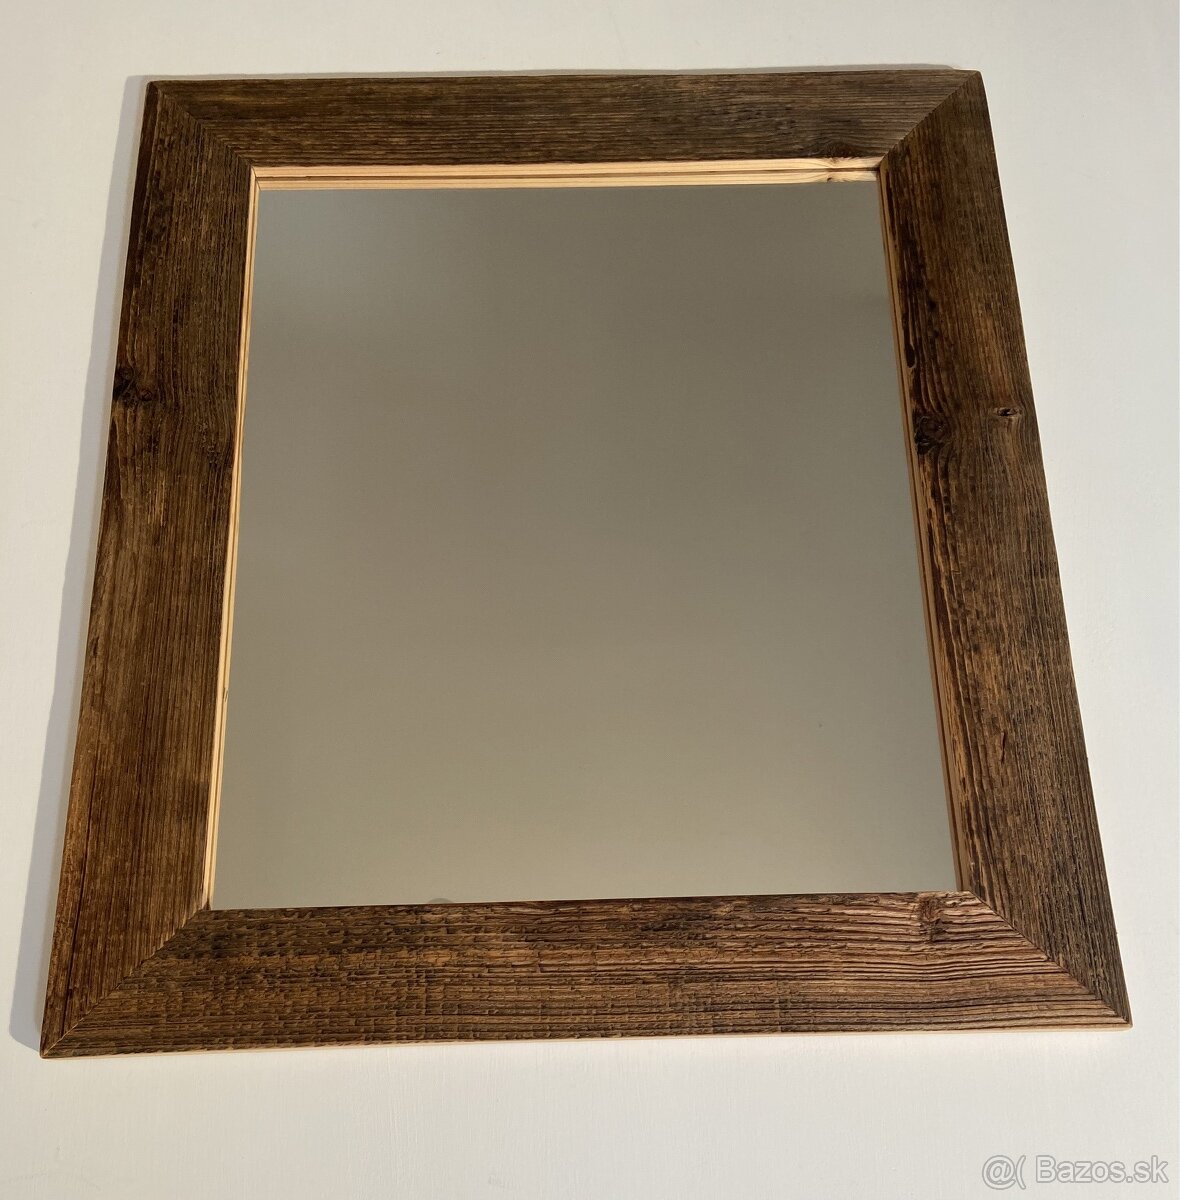 Zrkadlo staré drevo - slnkom opálená doska